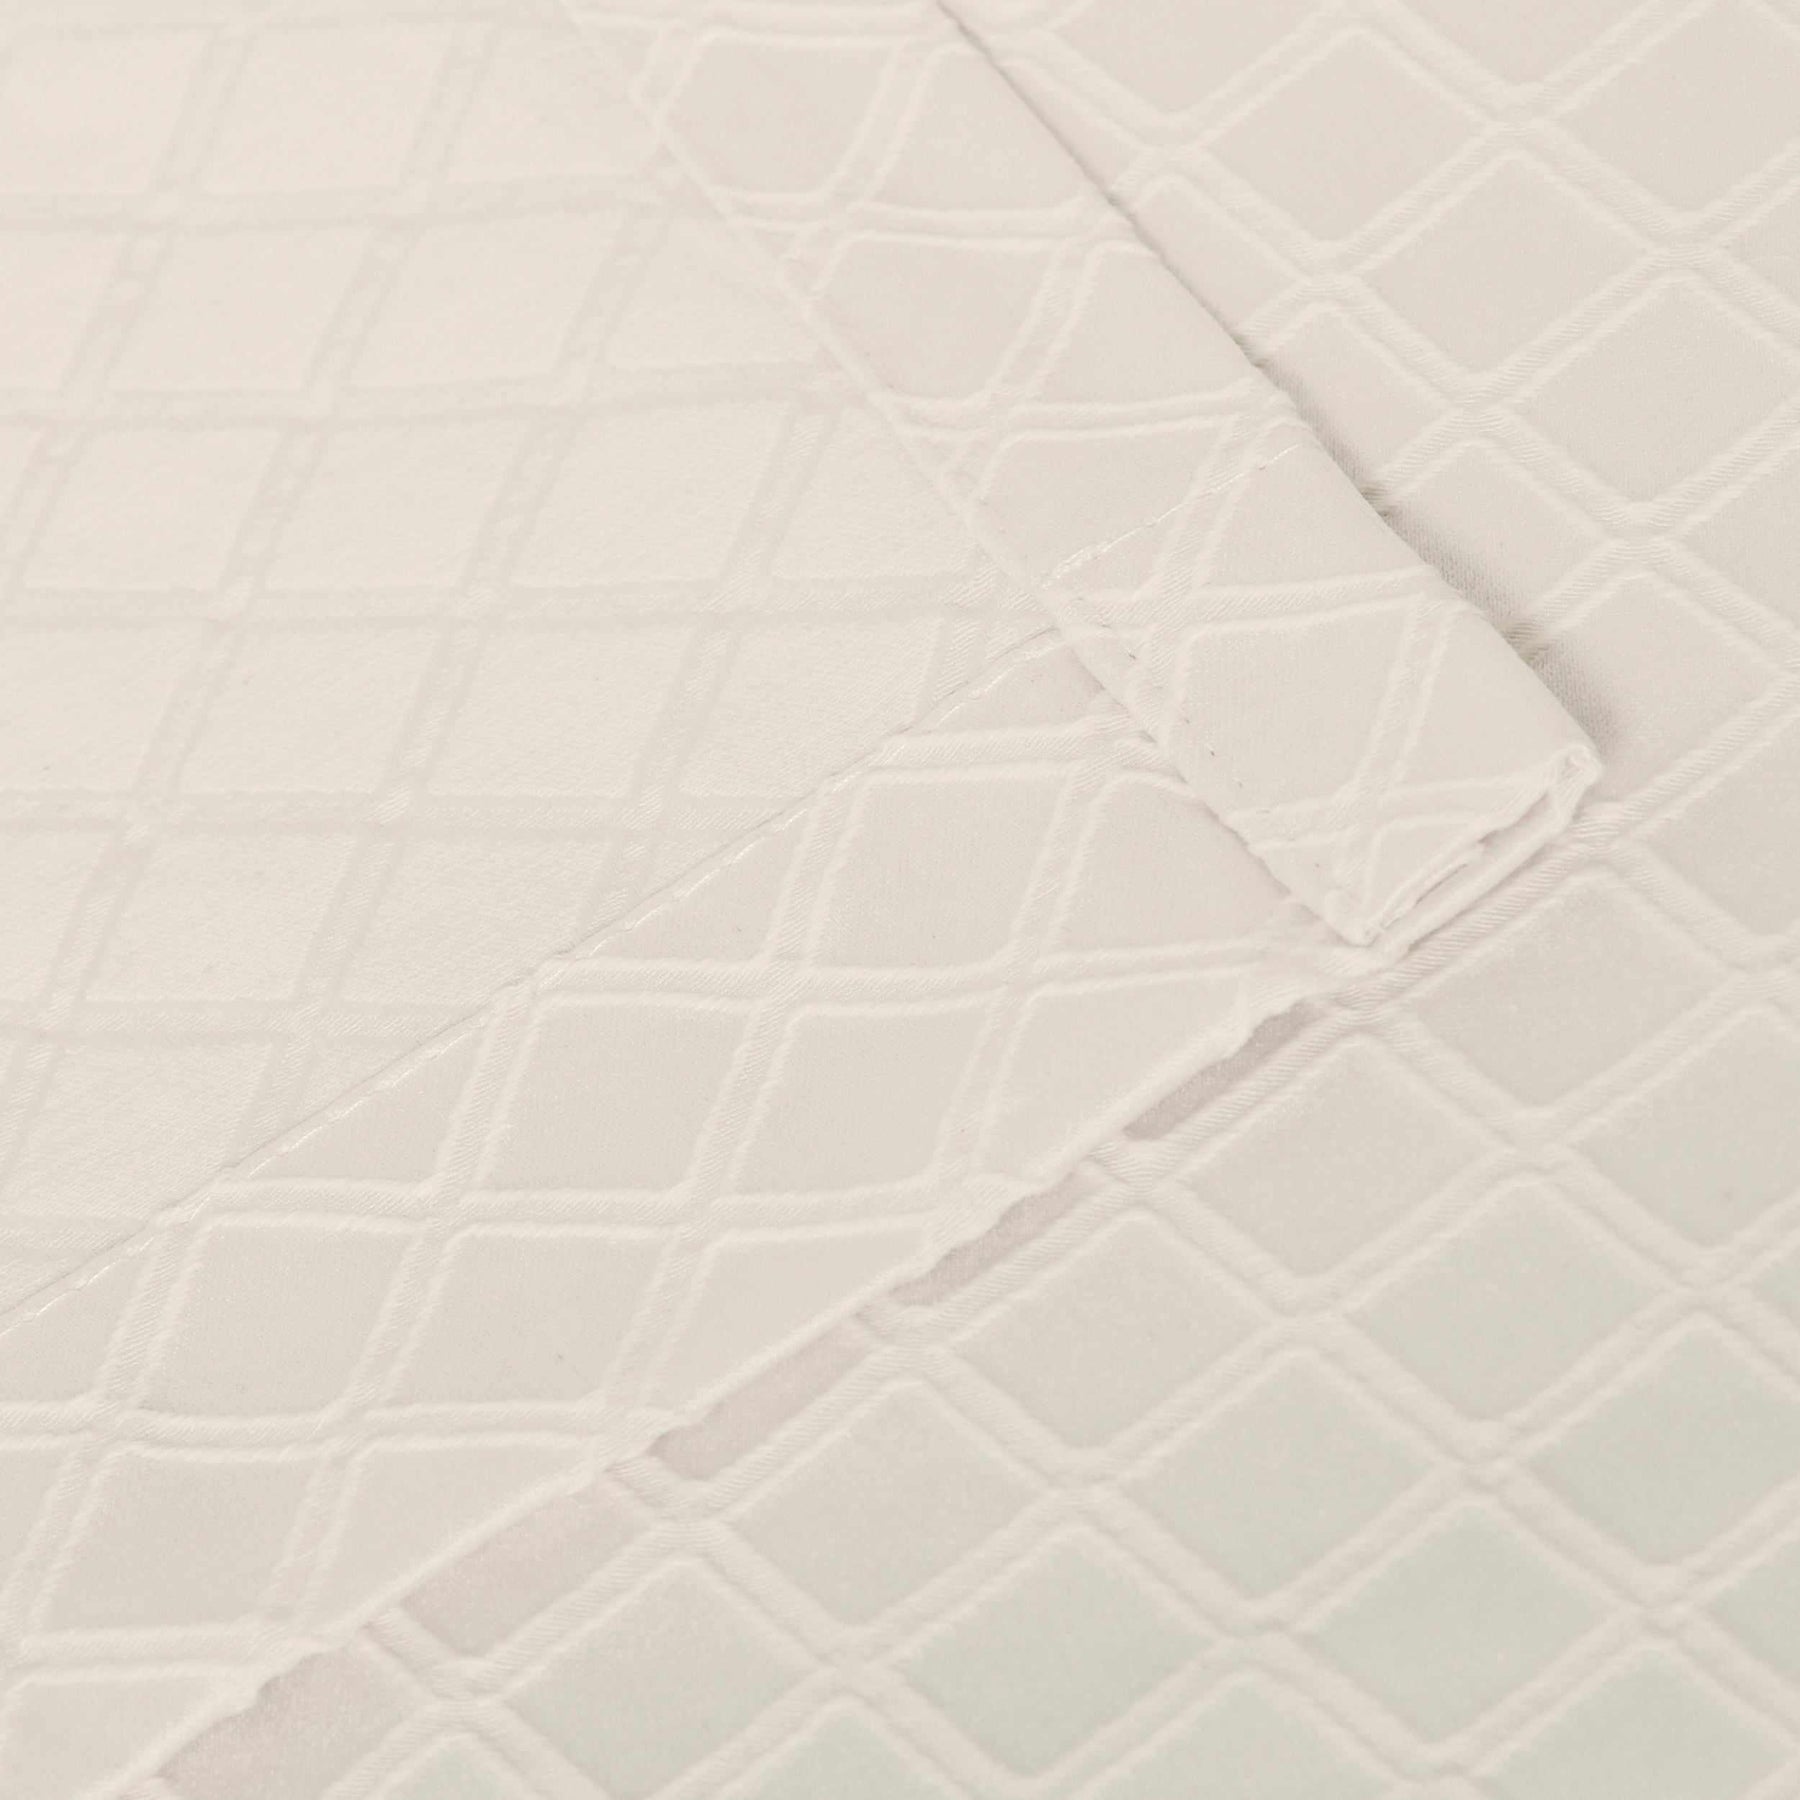  Westview Diamond Trellis Jacquard 2-Piece Grommet Curtain Panel Set  - White